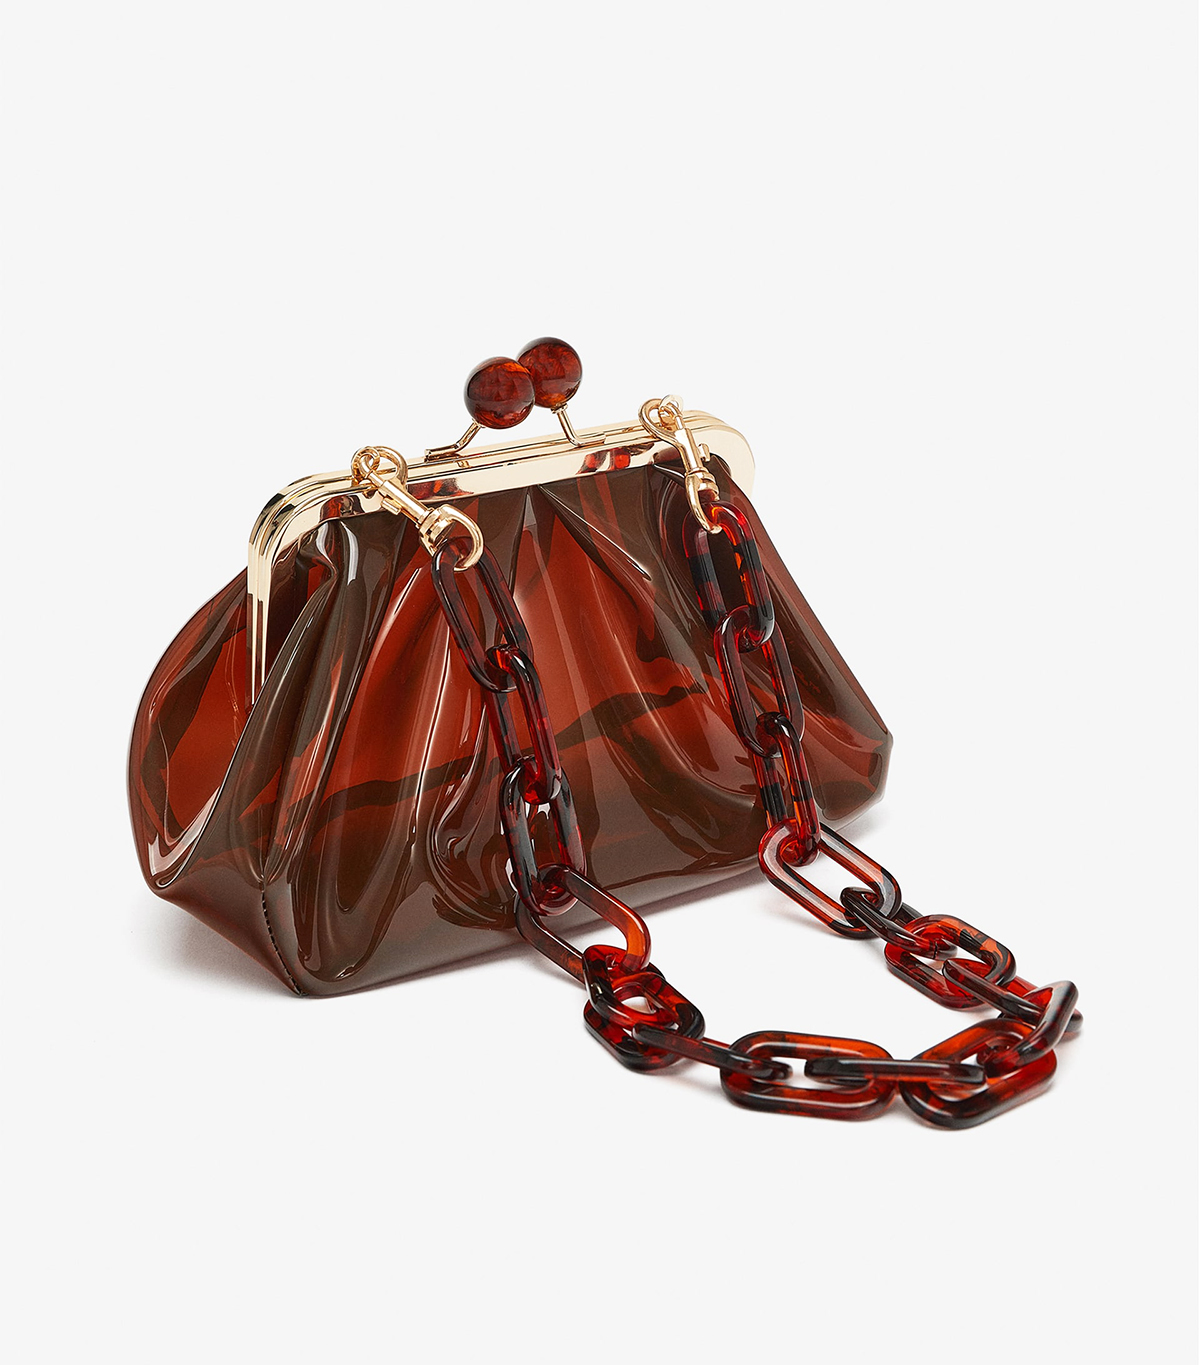 Emily Ratajkowski's Zara Bag Is So 